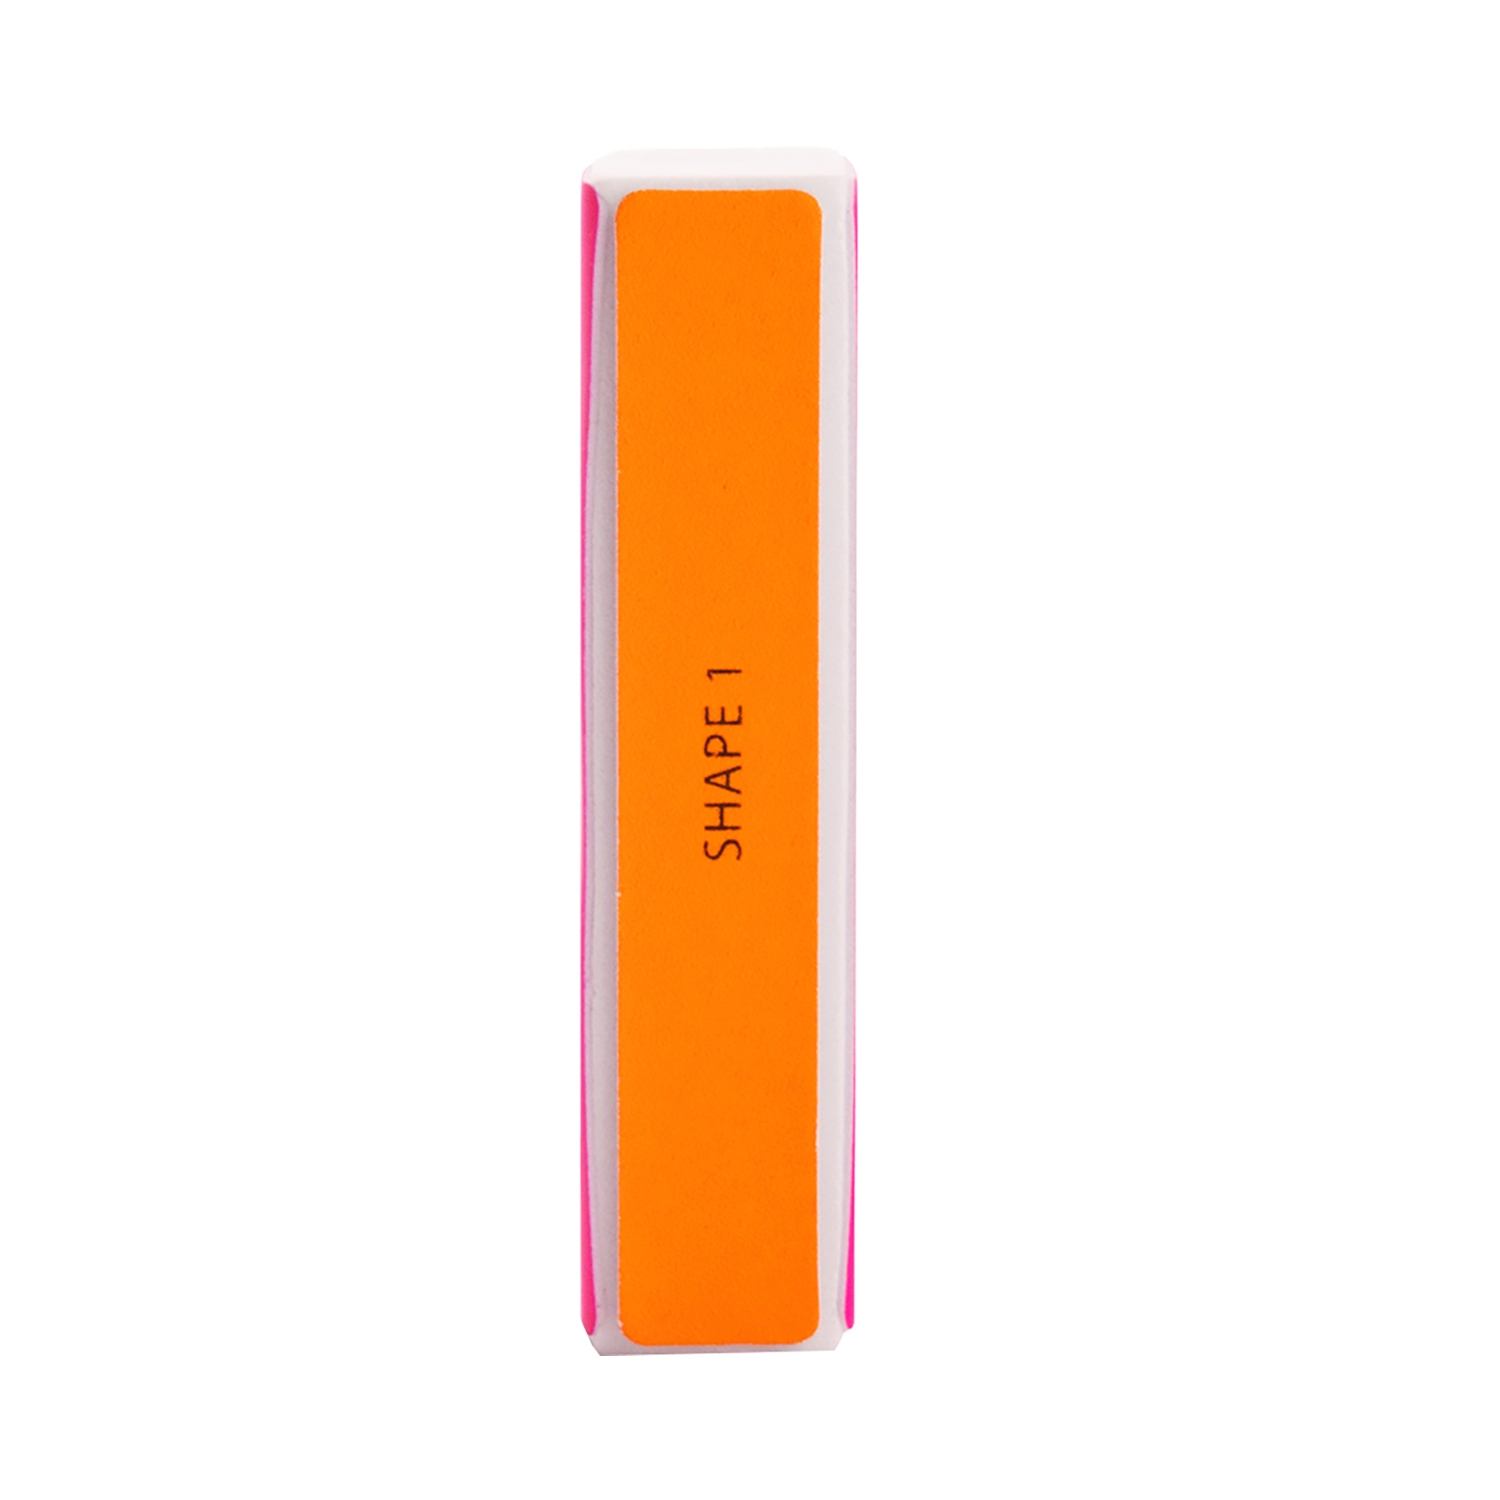 Colorbar | Colorbar Nail Buffer Quickfix 4-Way Nail Buffer - Pink, Orange